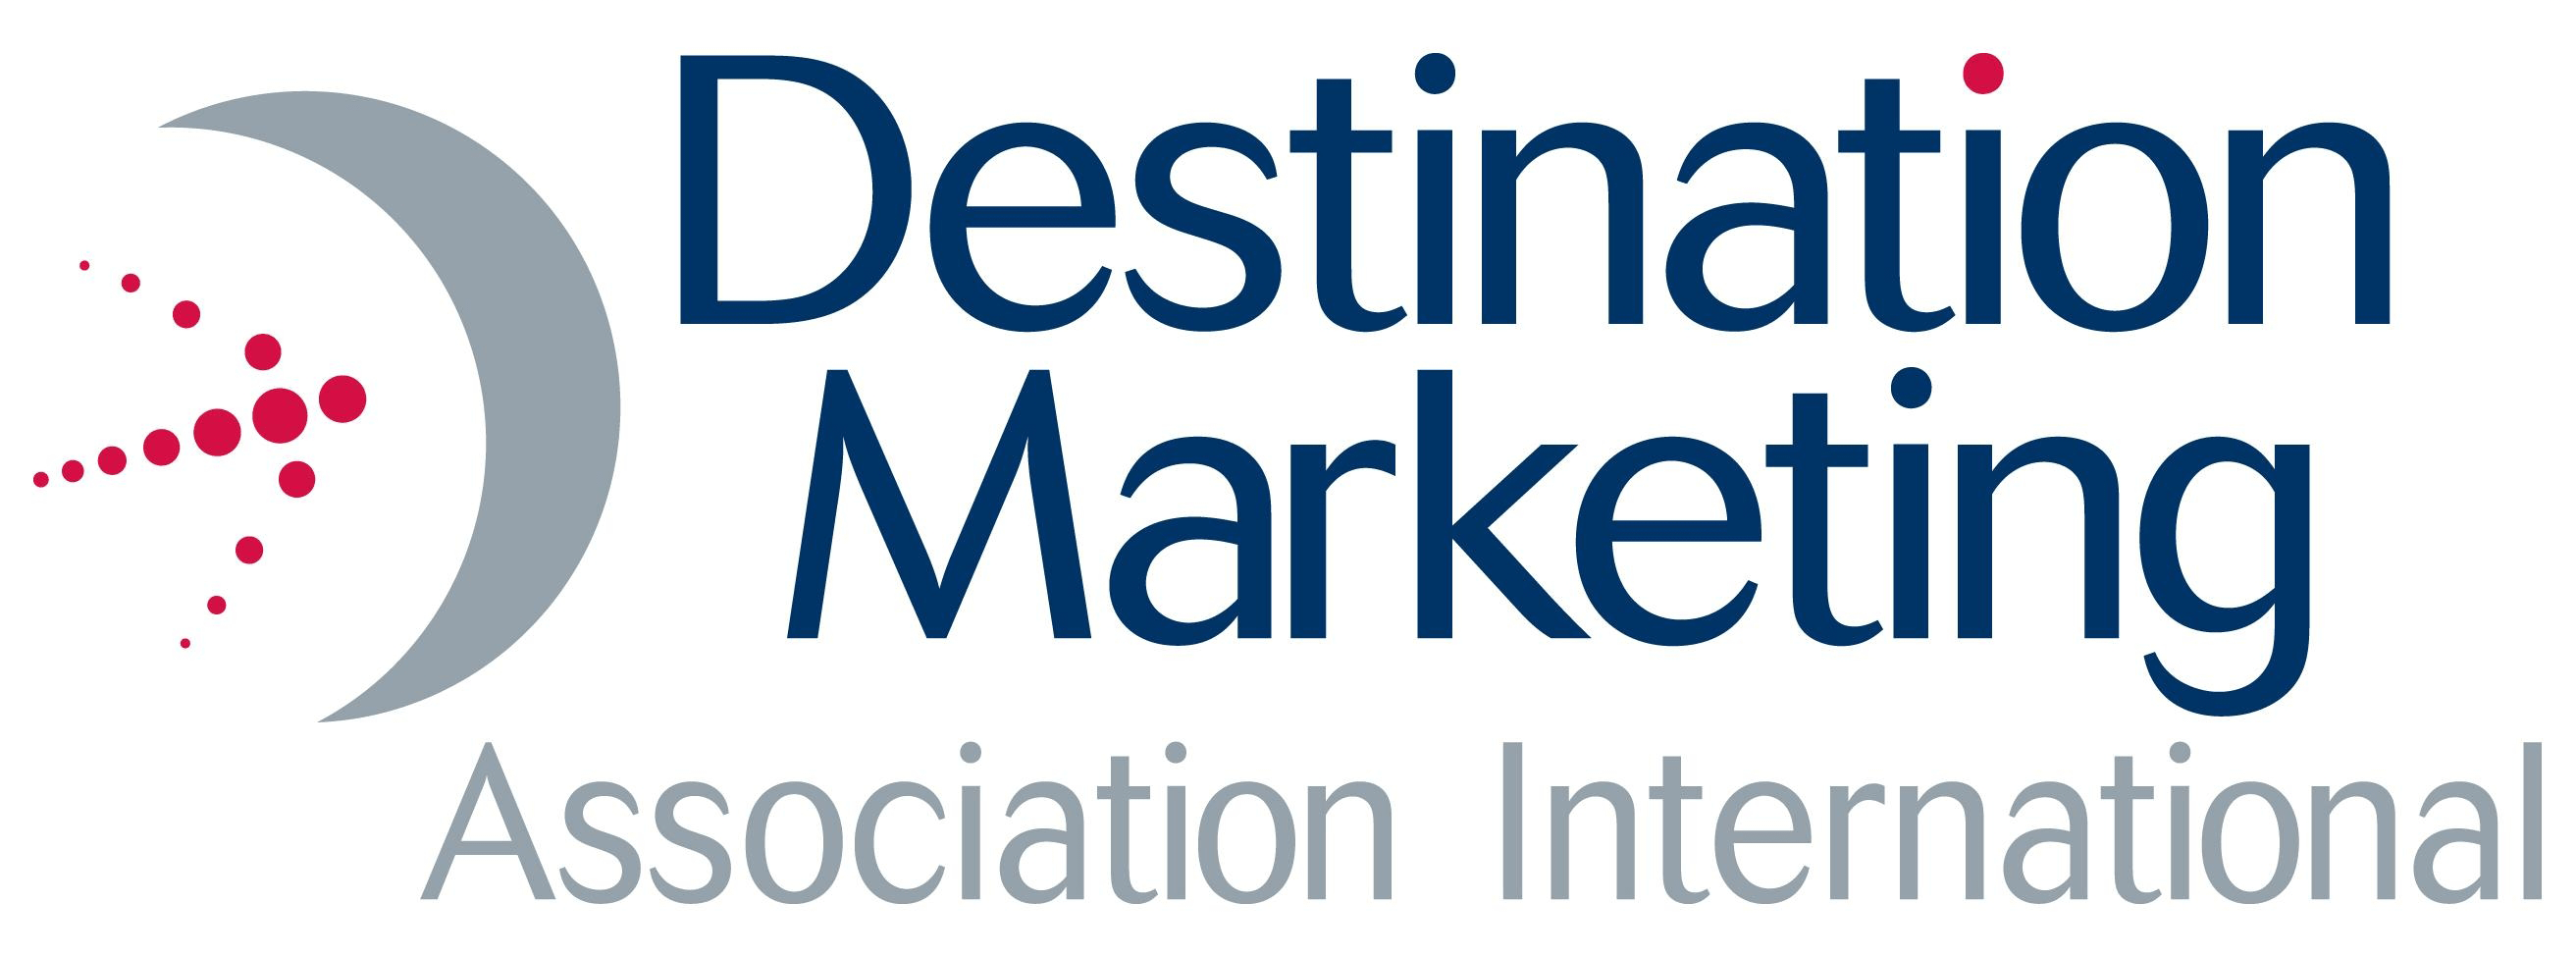 Destination Marketing Association International